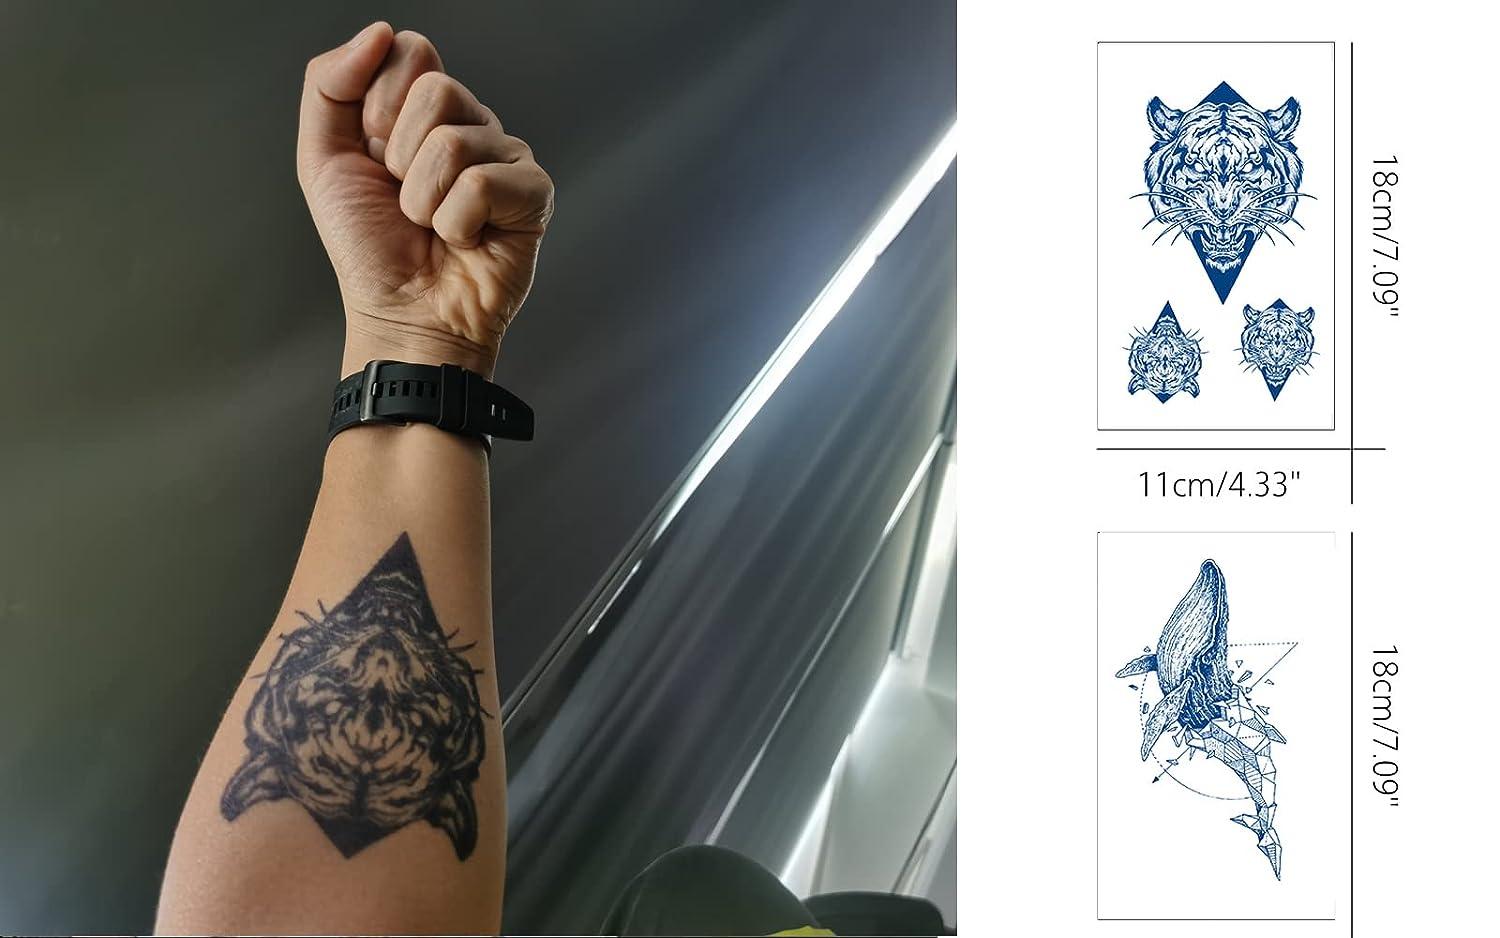 50+ Arrow Tattoo Ideas for the Minimalist – MyBodiArt